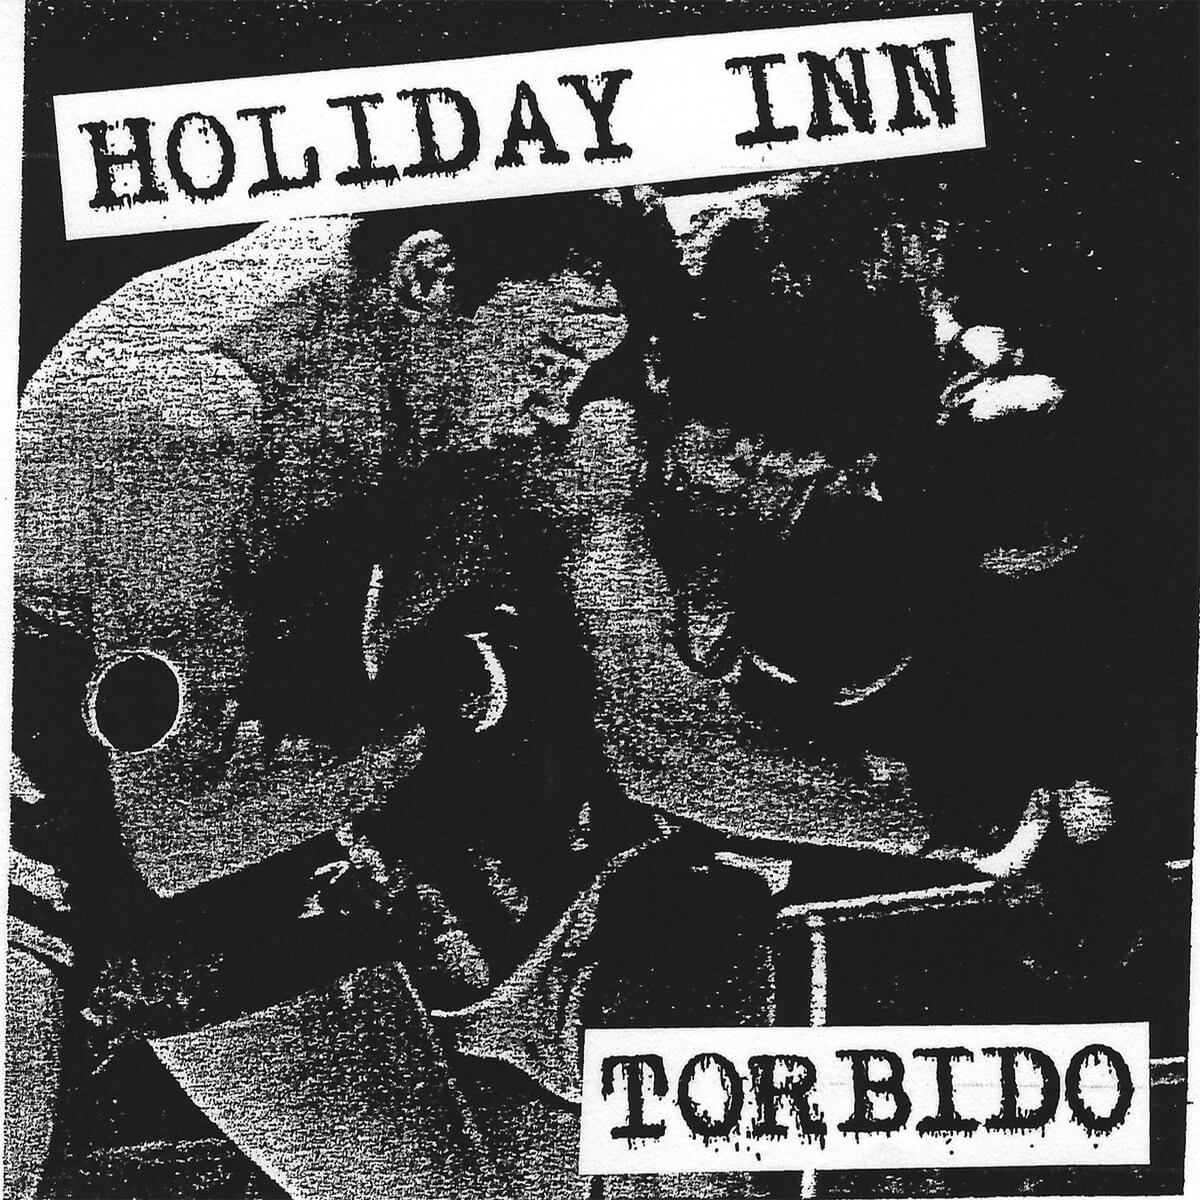 Holiday Inn - Torbido - Avant Records